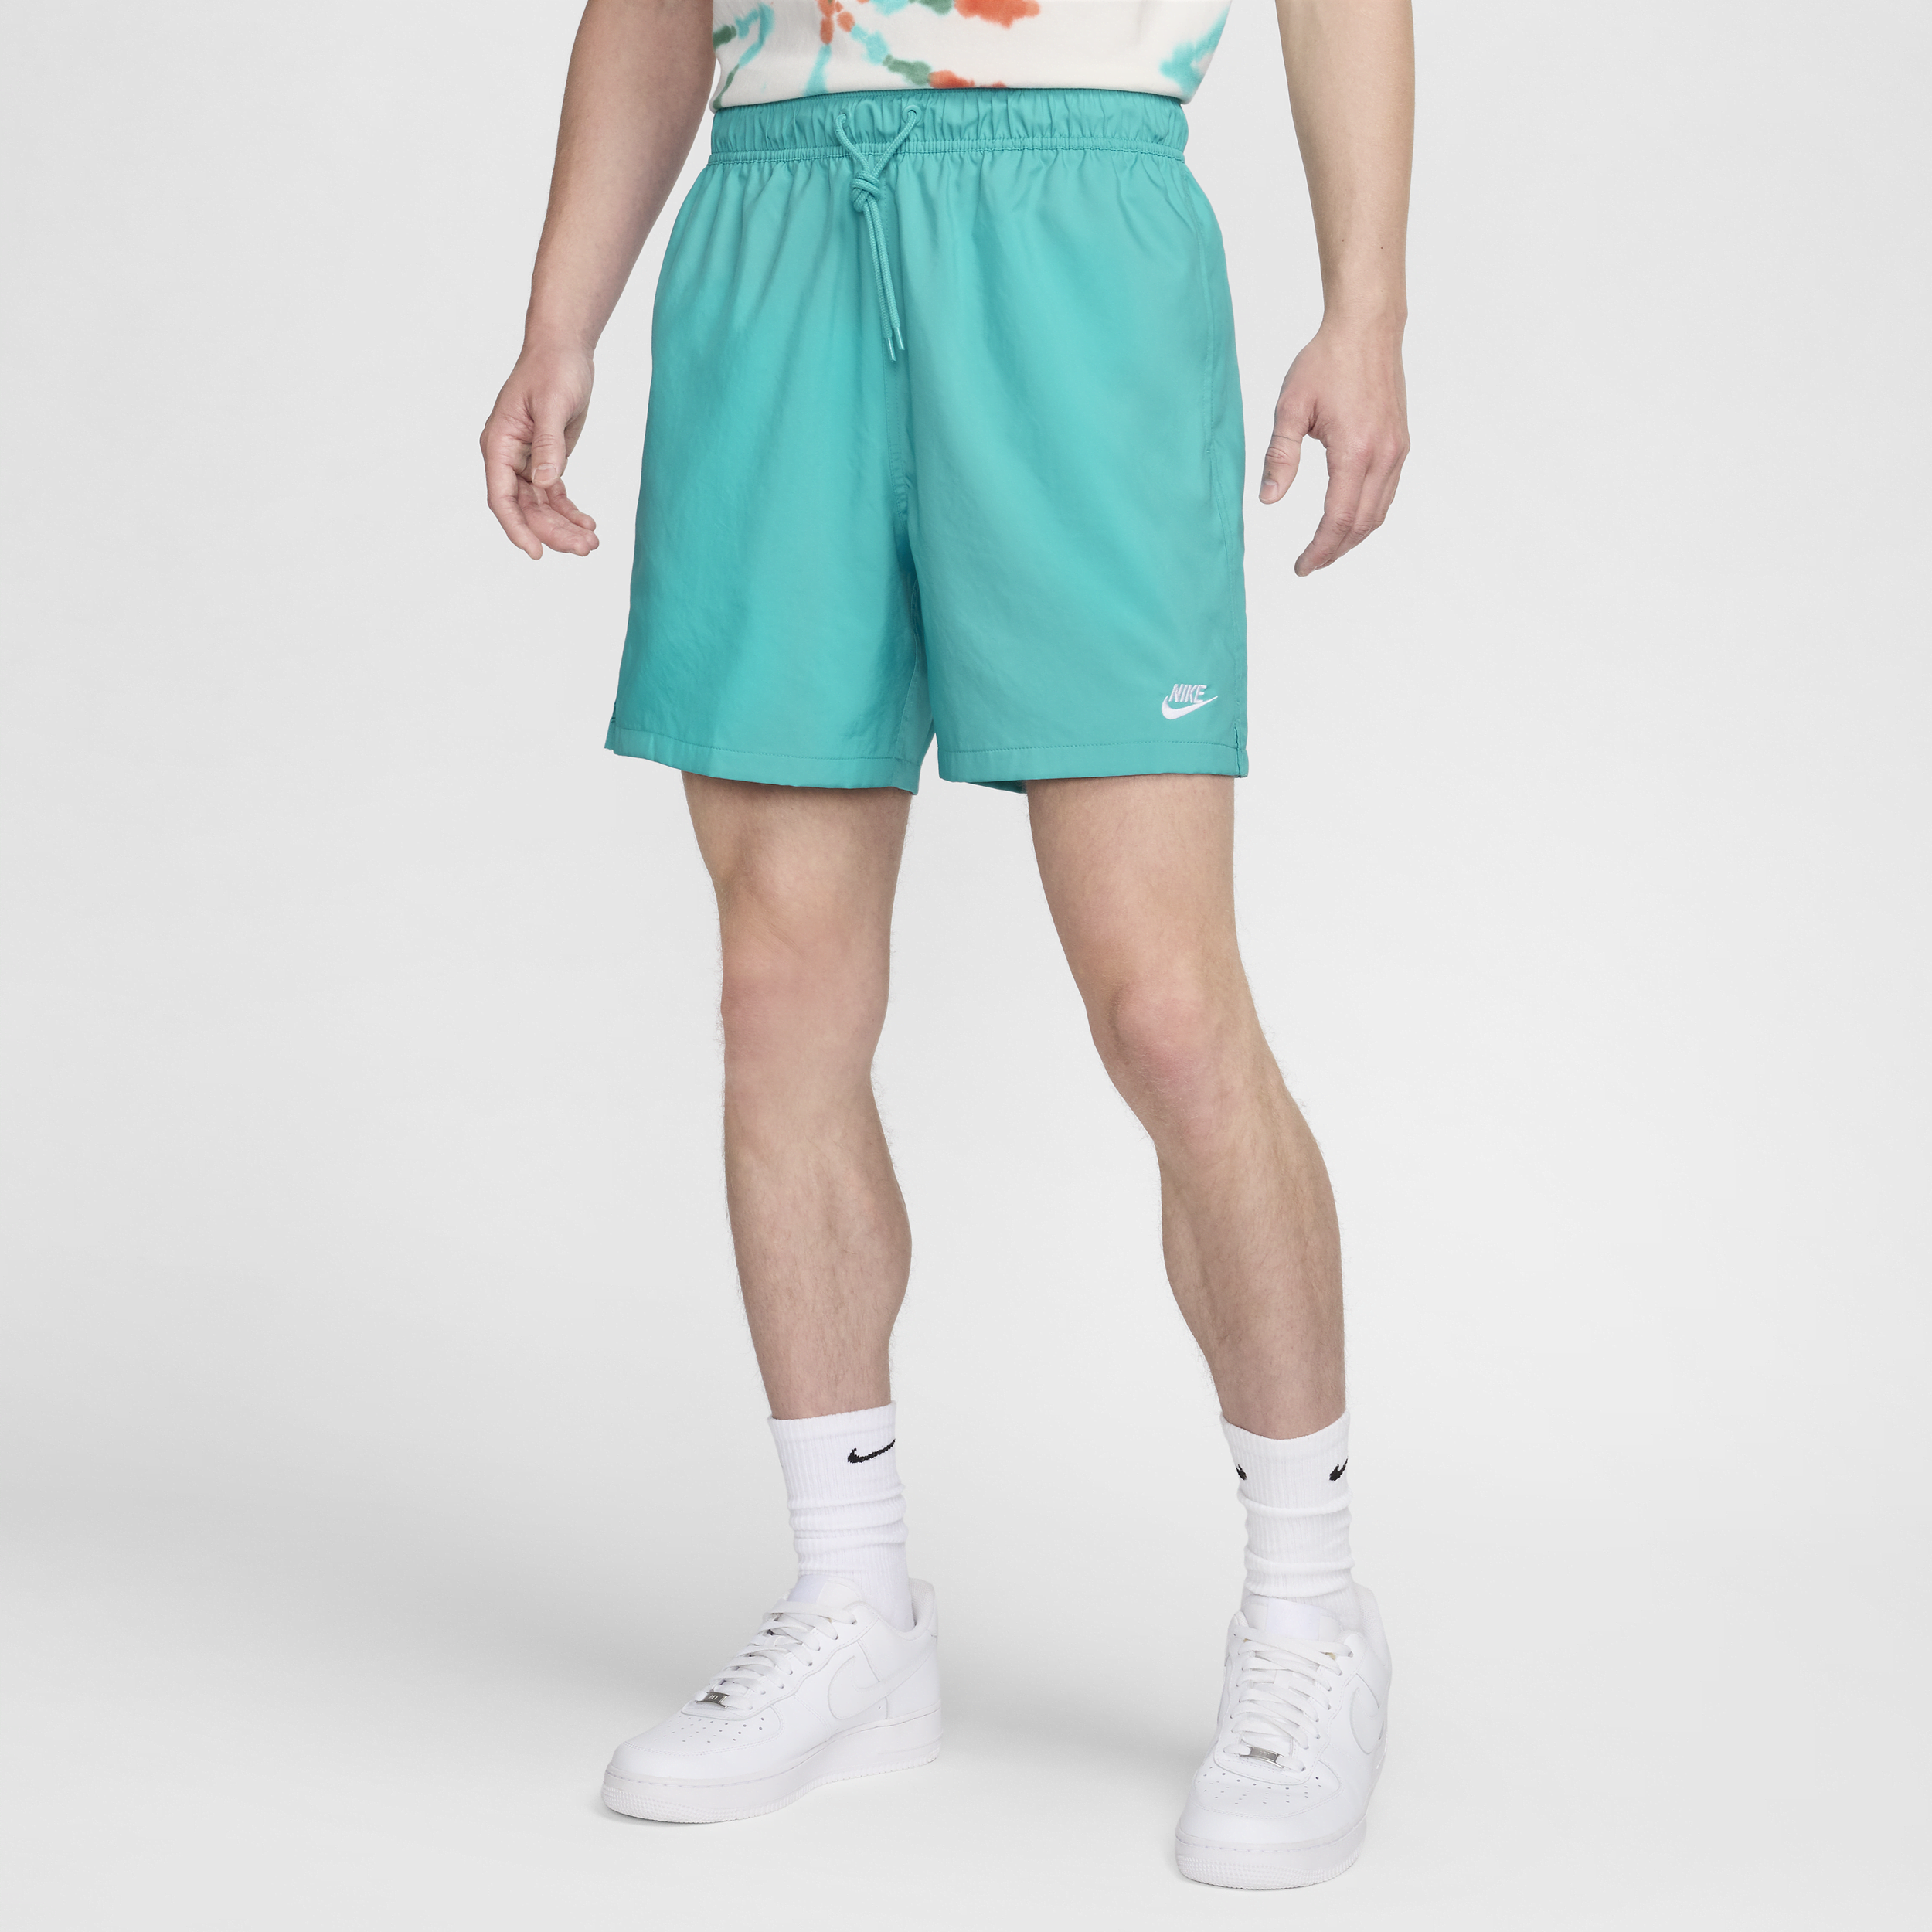 Shorts Flow in tessuto Nike Club – Uomo - Verde